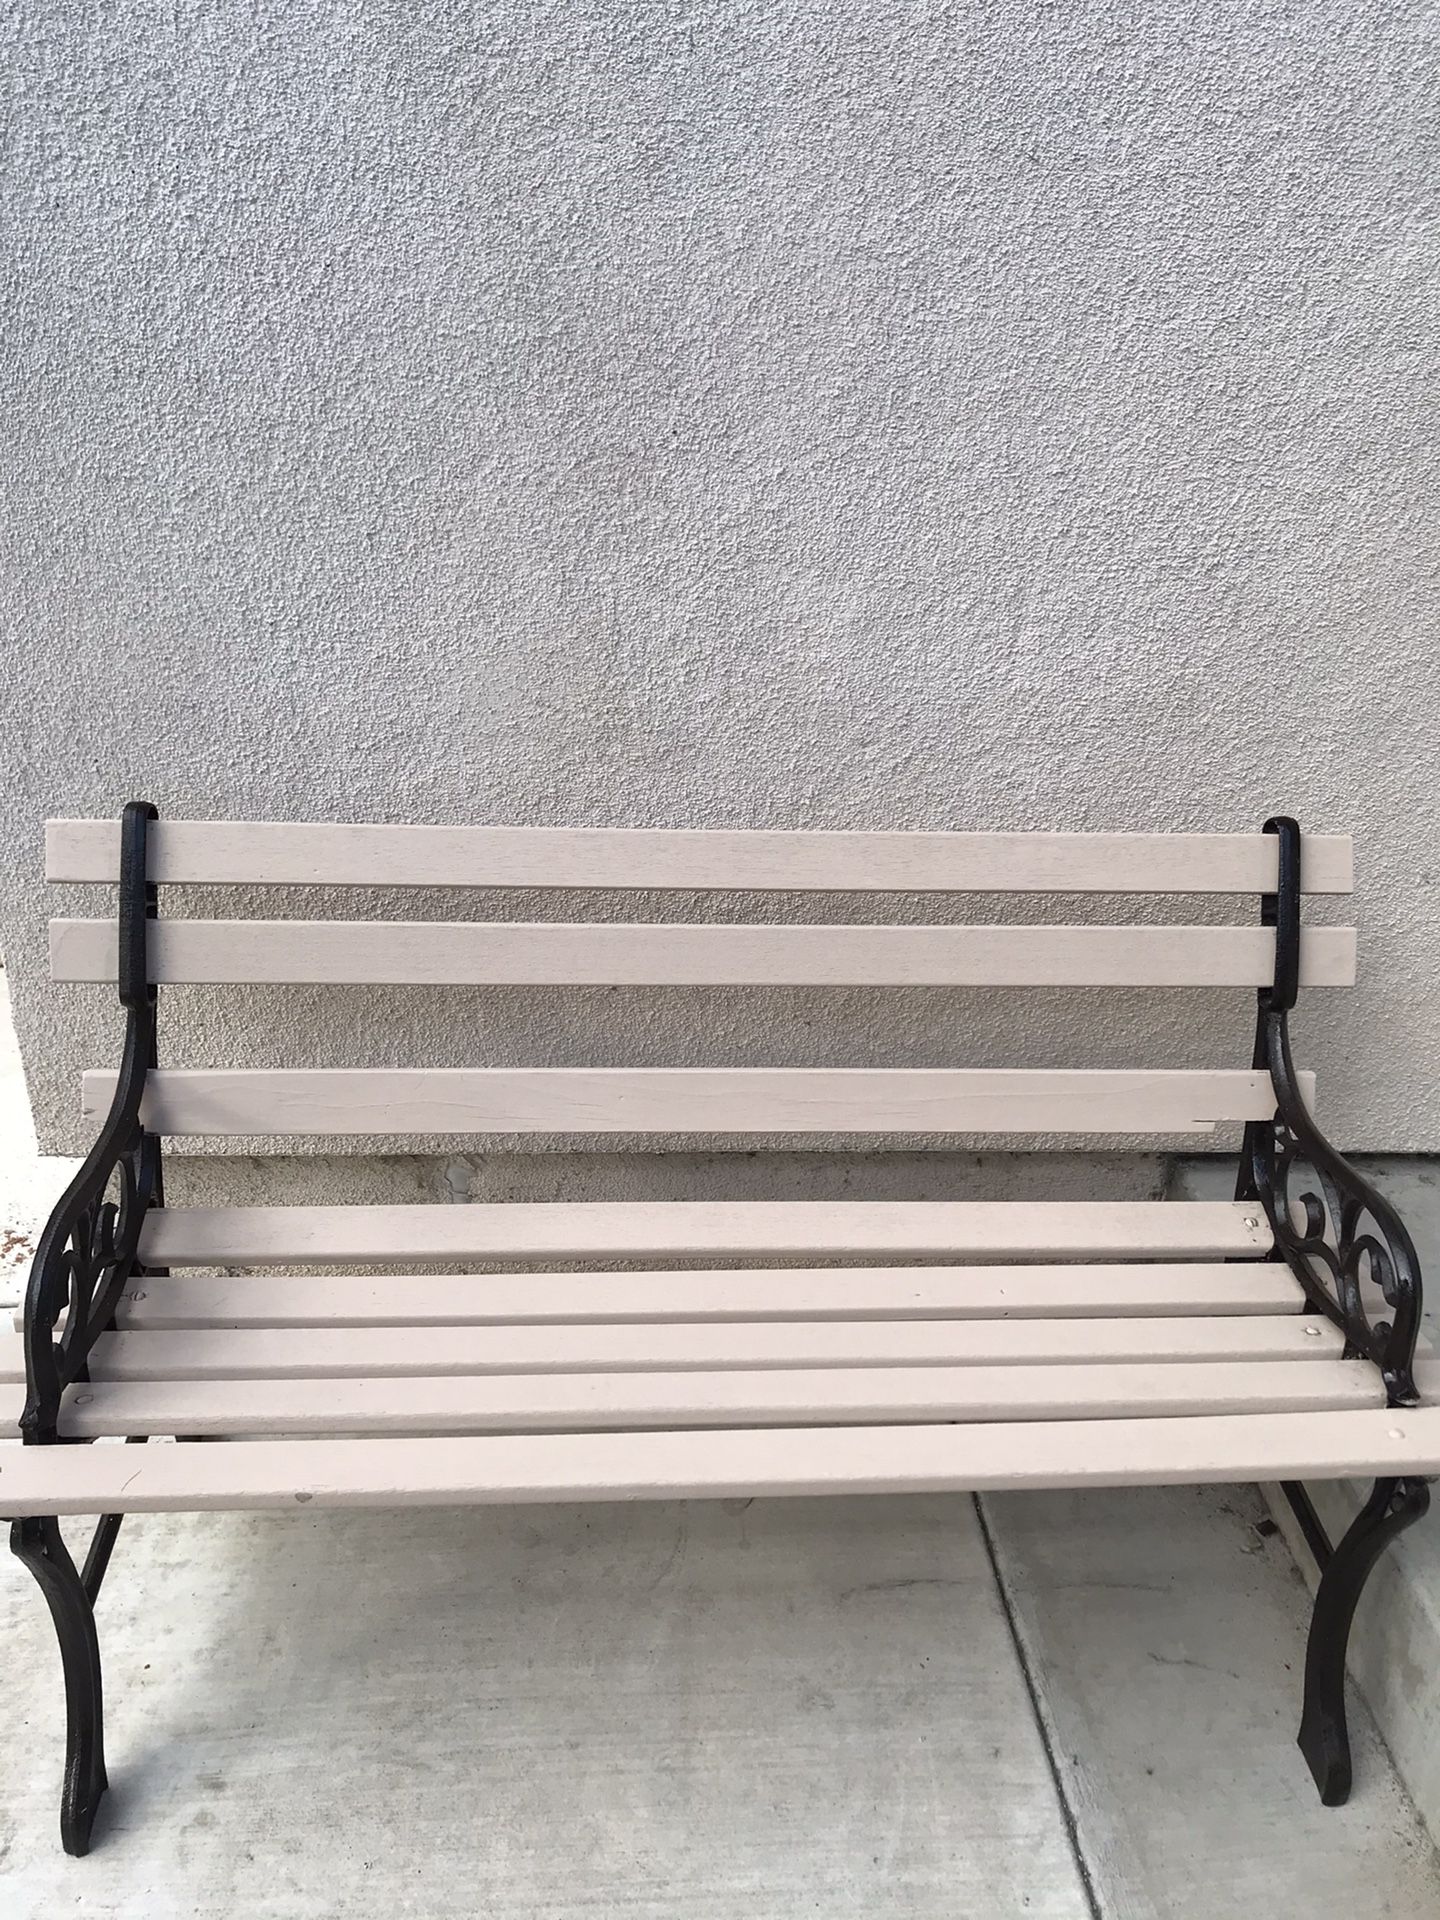 Patio antique bench